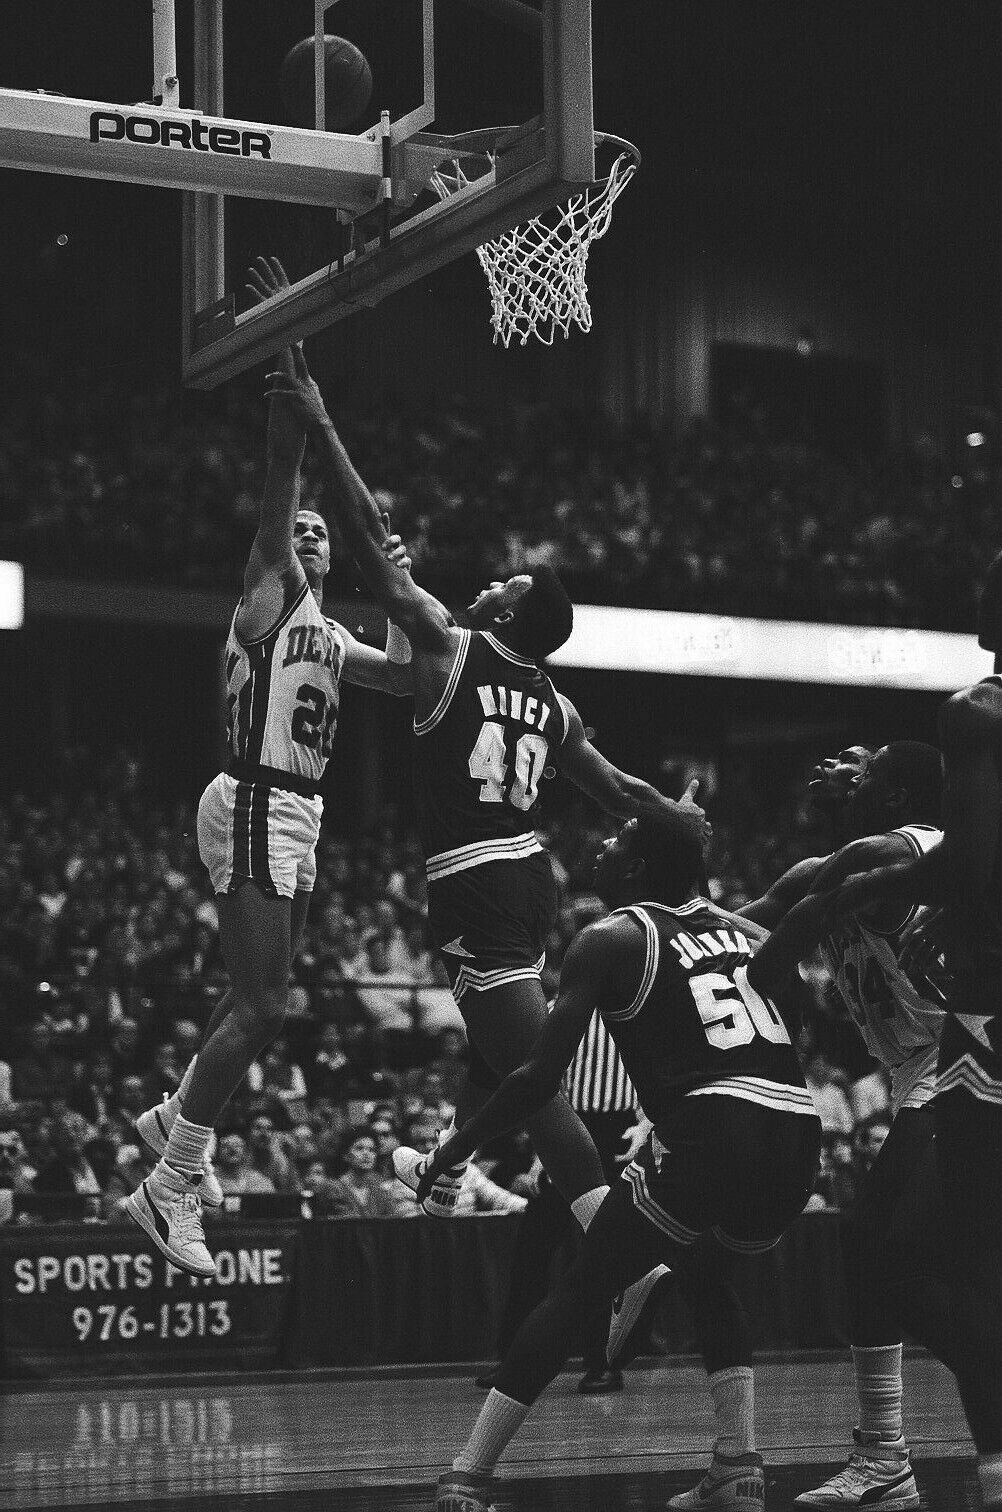 LD125-46 1986 College Basketball DePaul UAB Blazers (55) ORIG 35mm B&W NEGATIVES Без бренда - фотография #10